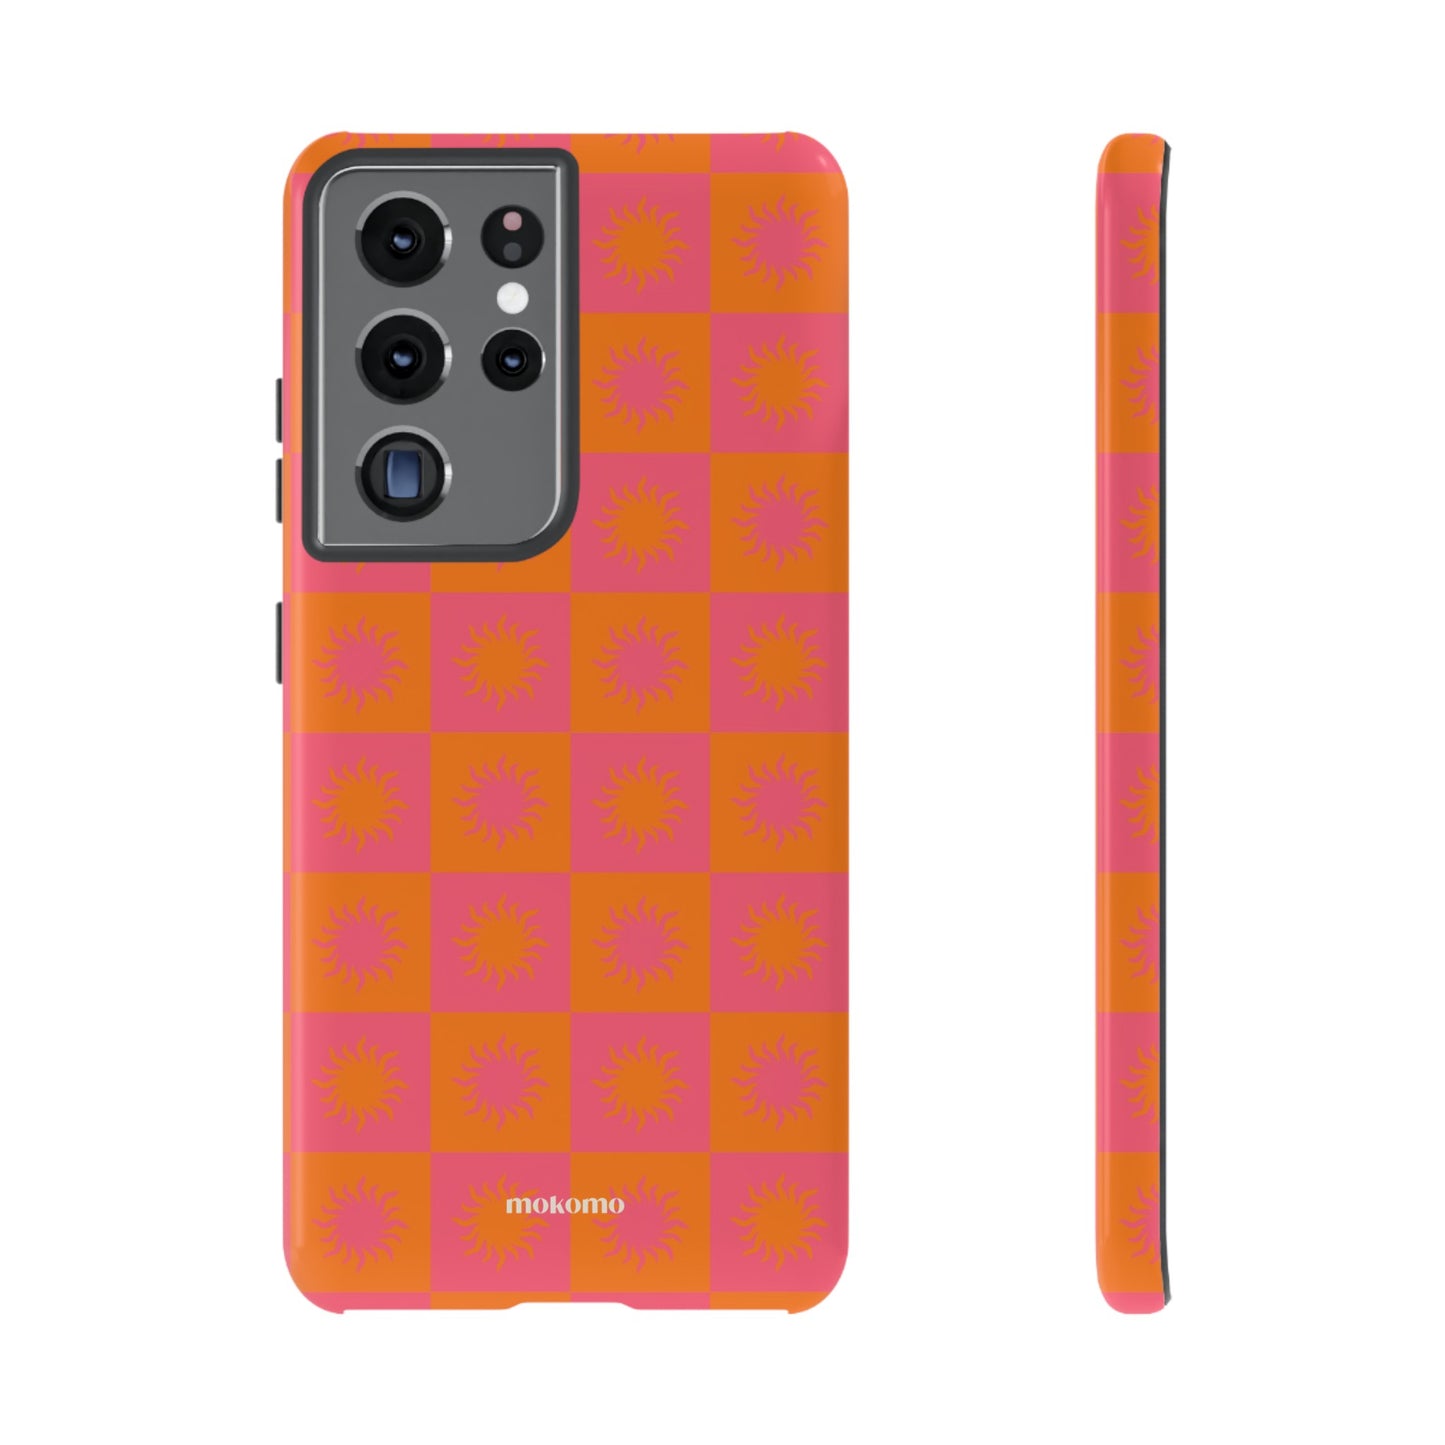 Barcelona Orange